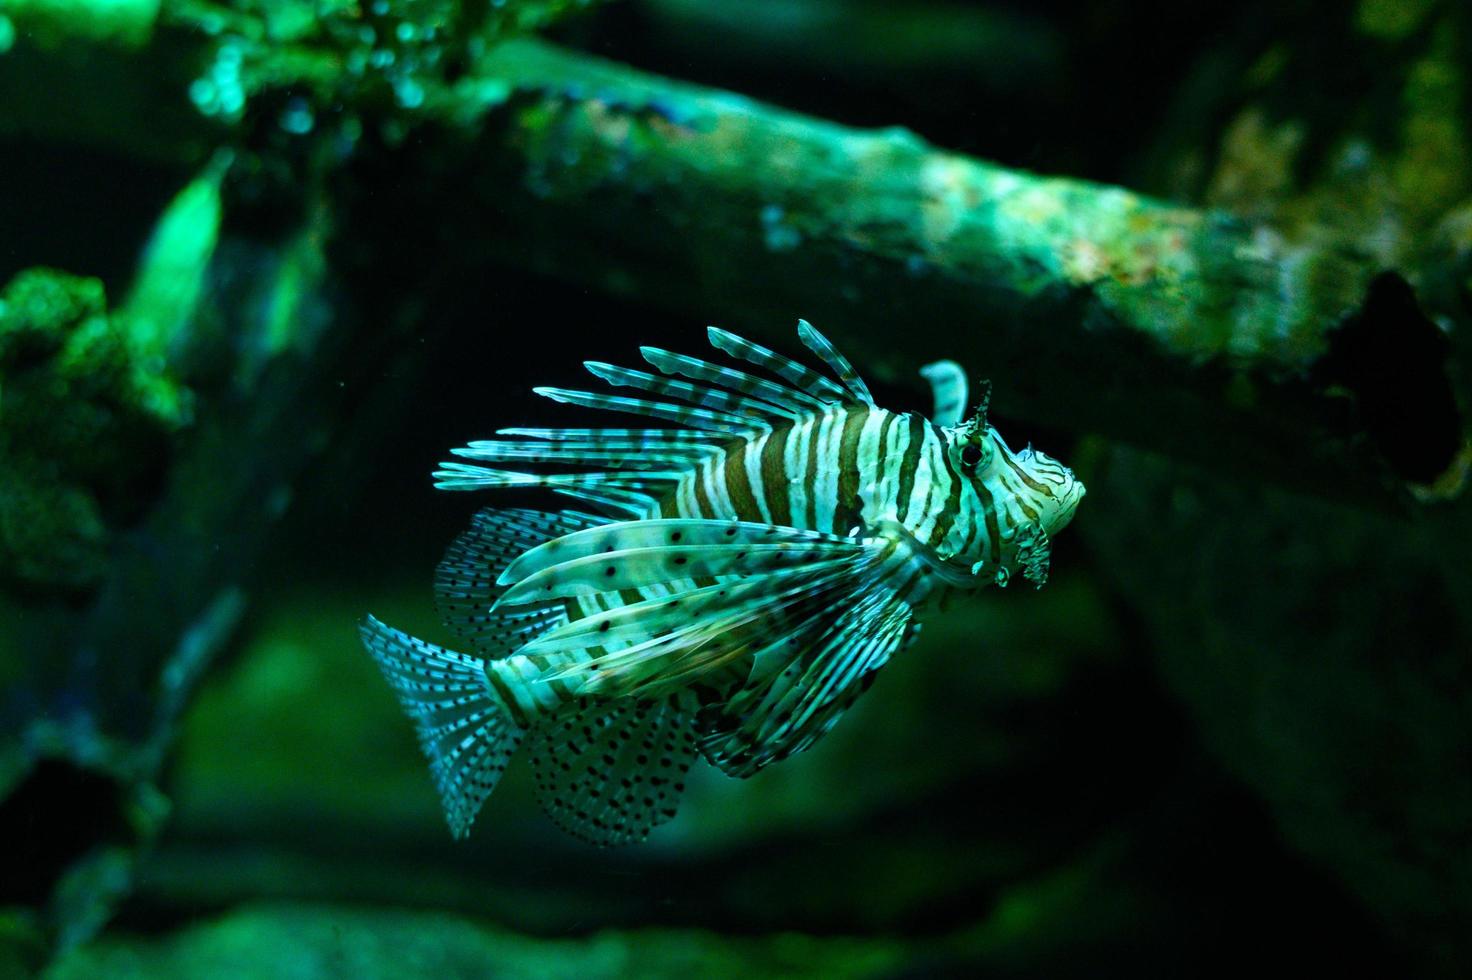 Underwater world. Lionfish fish in an aquarium photo